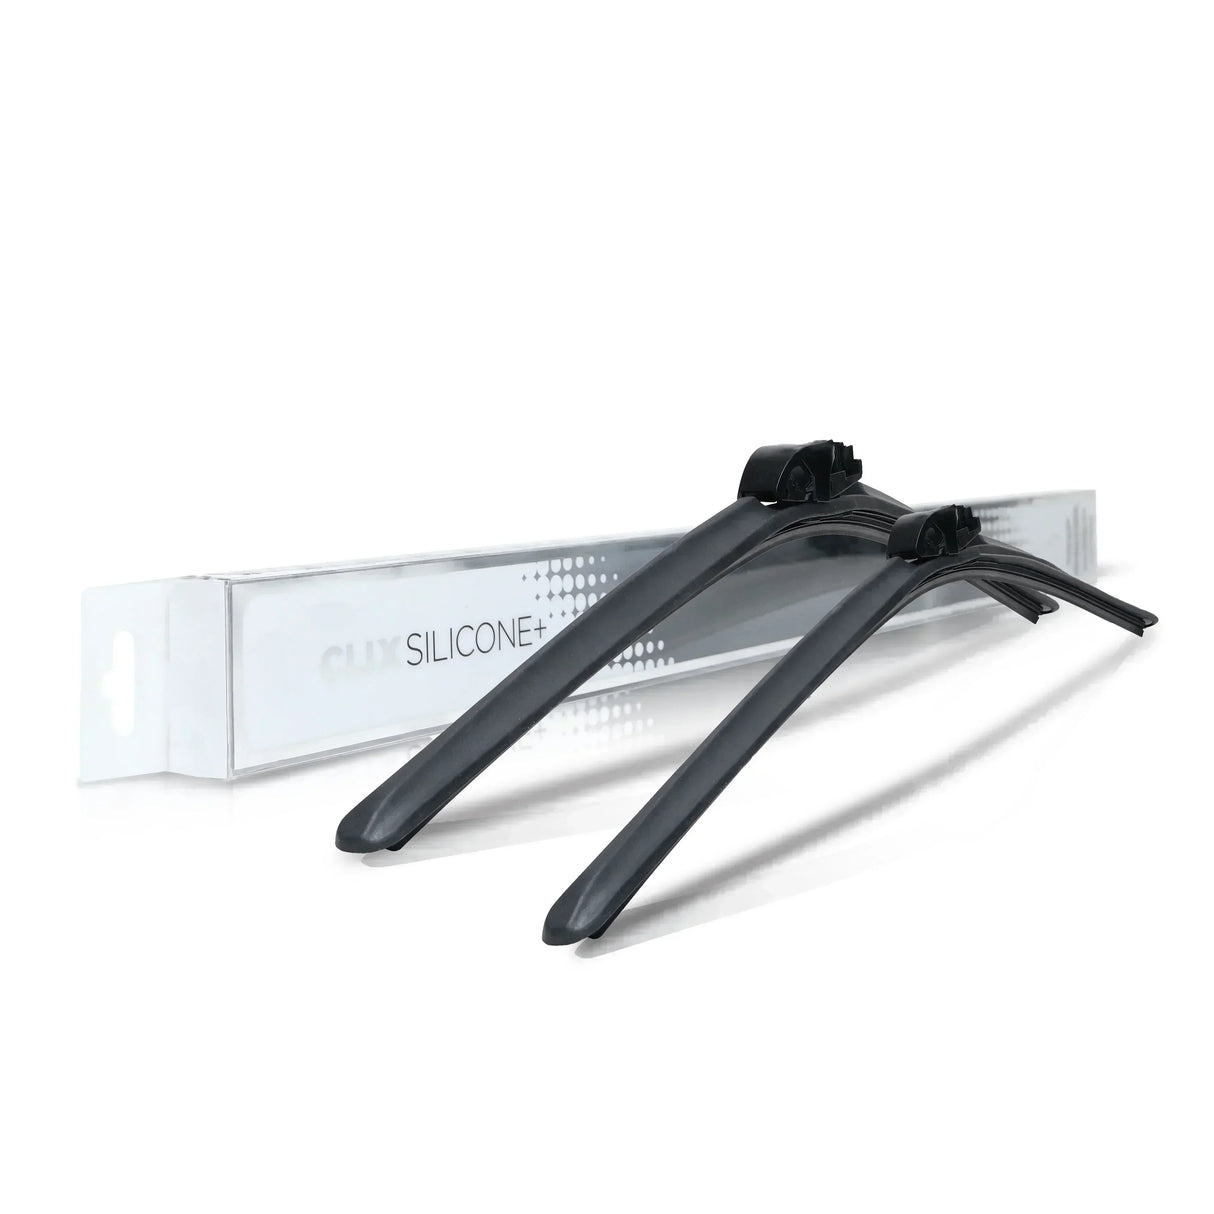 Scion FR-S Windshield Wiper Blades - ClixAuto